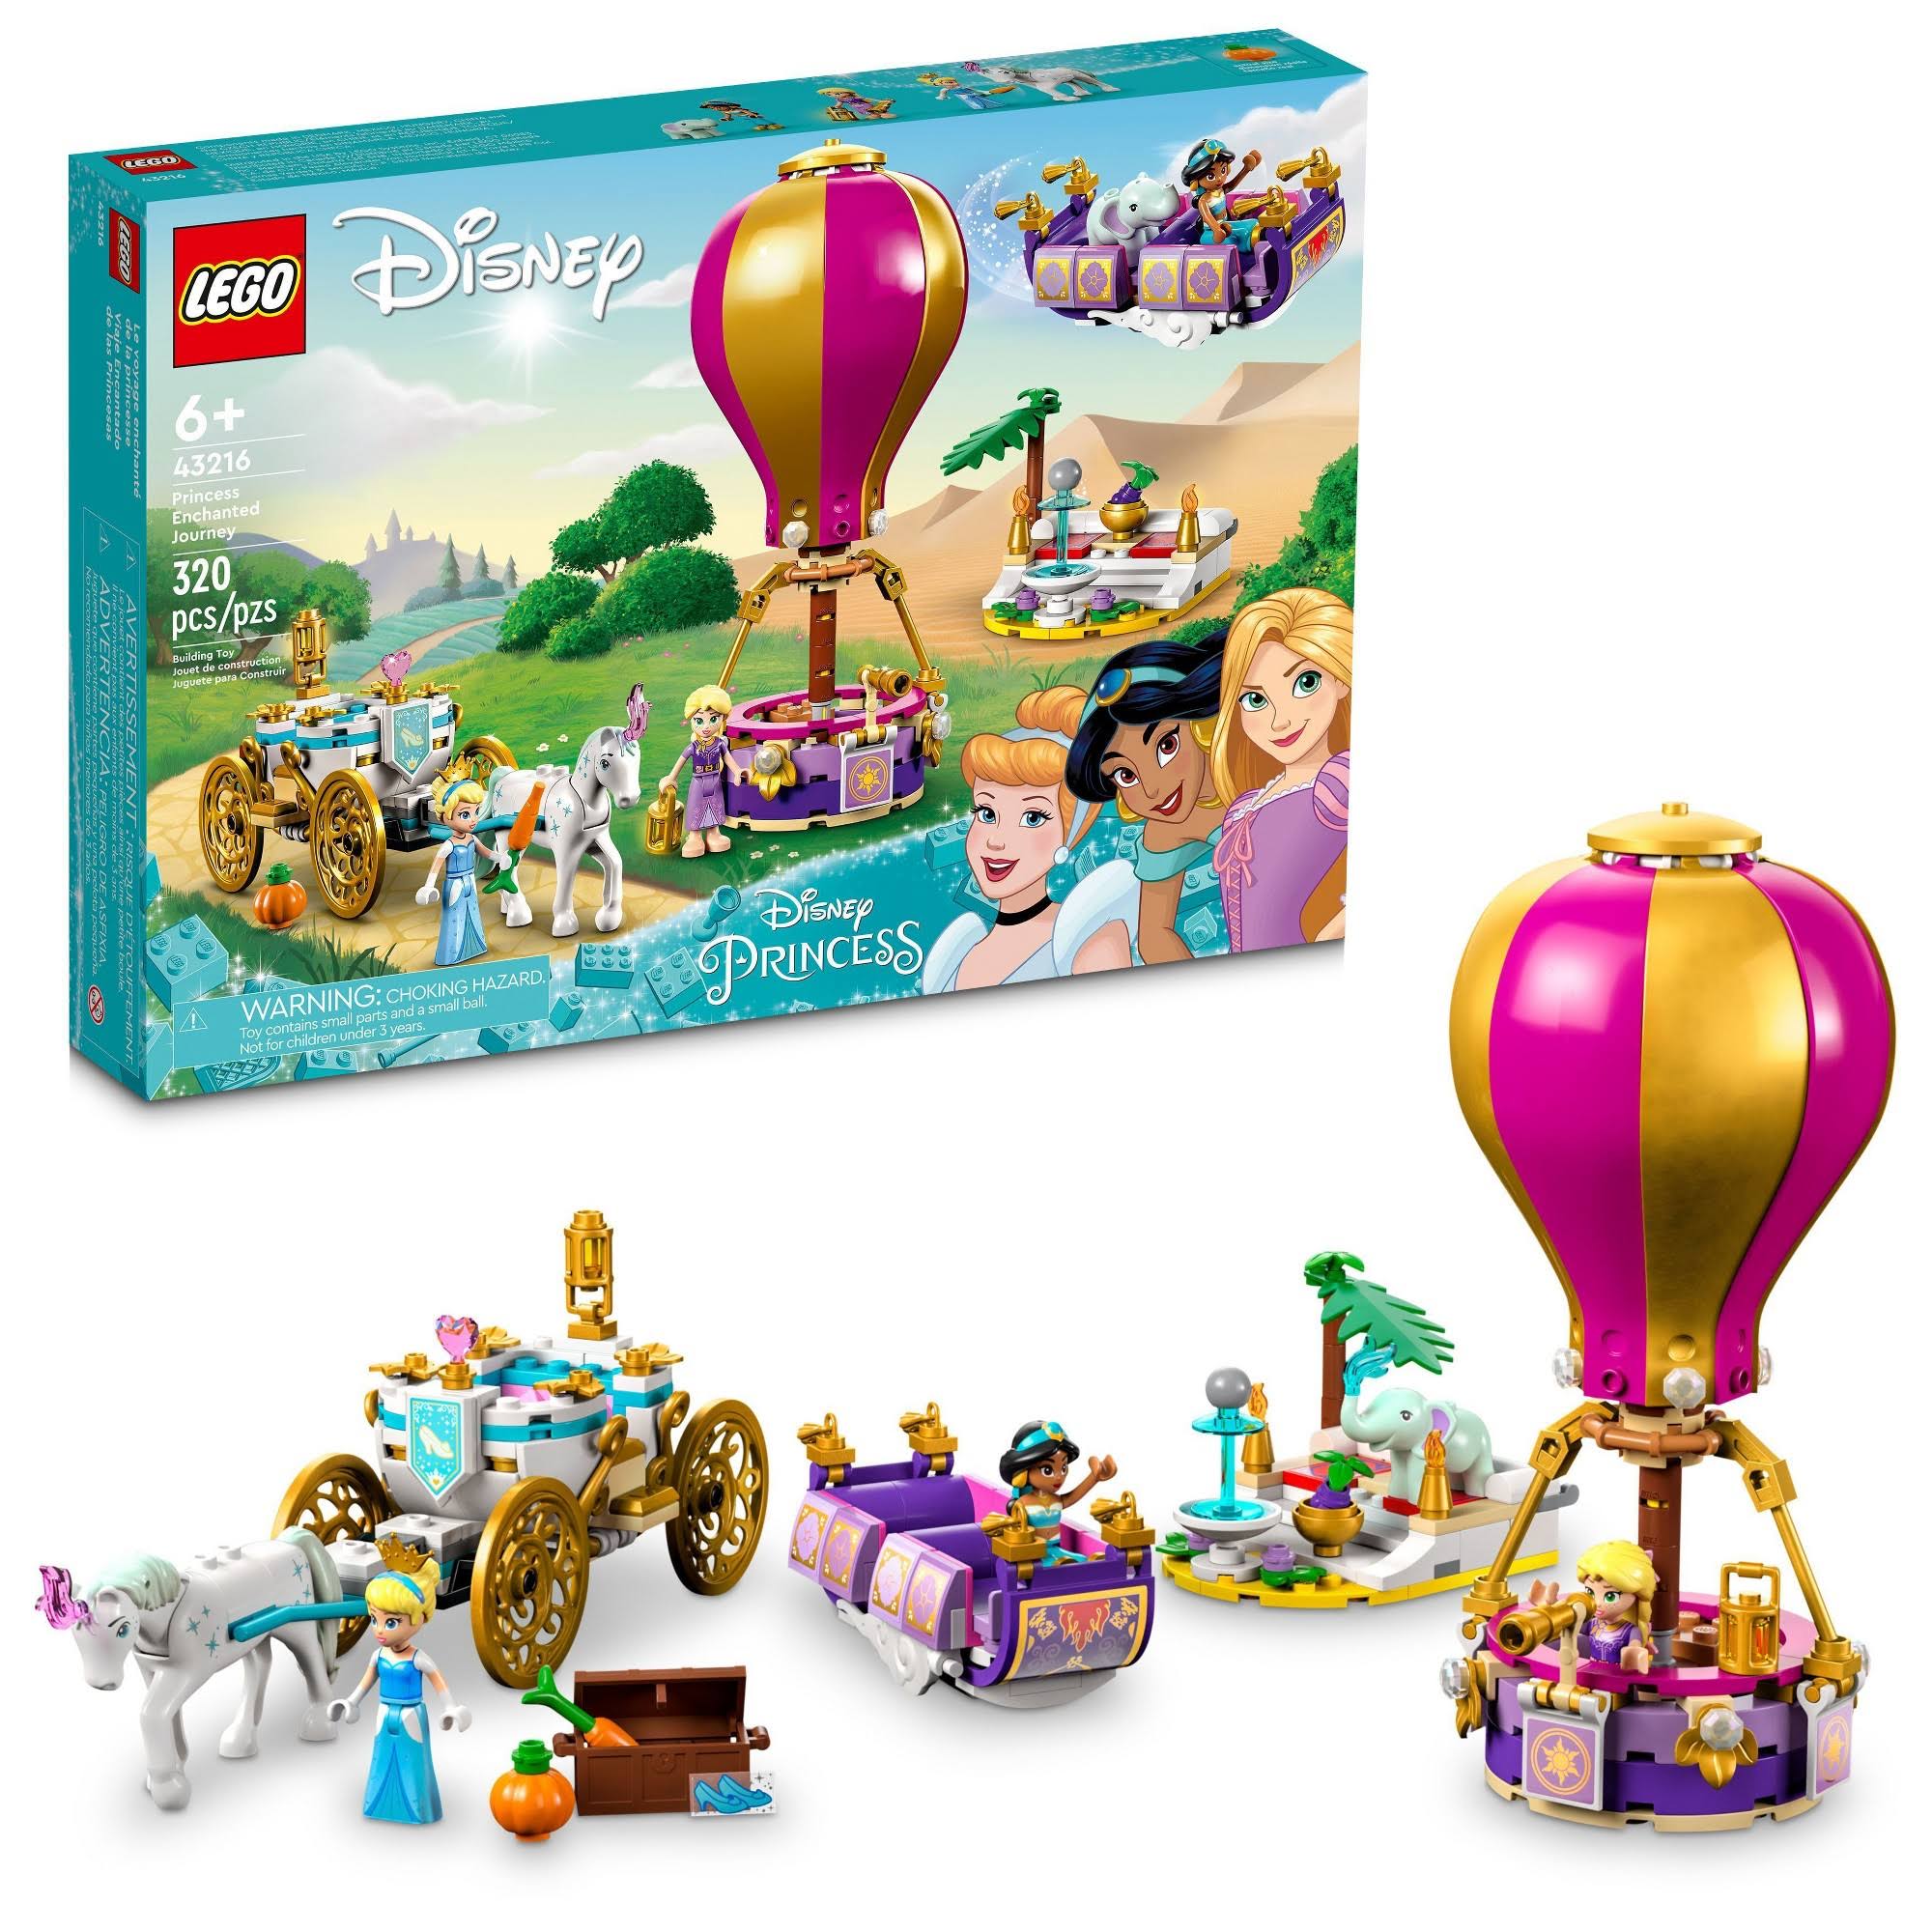 LEGO - Disney Princess Enchanted Journey 43216 - 6427573 - 673419378468